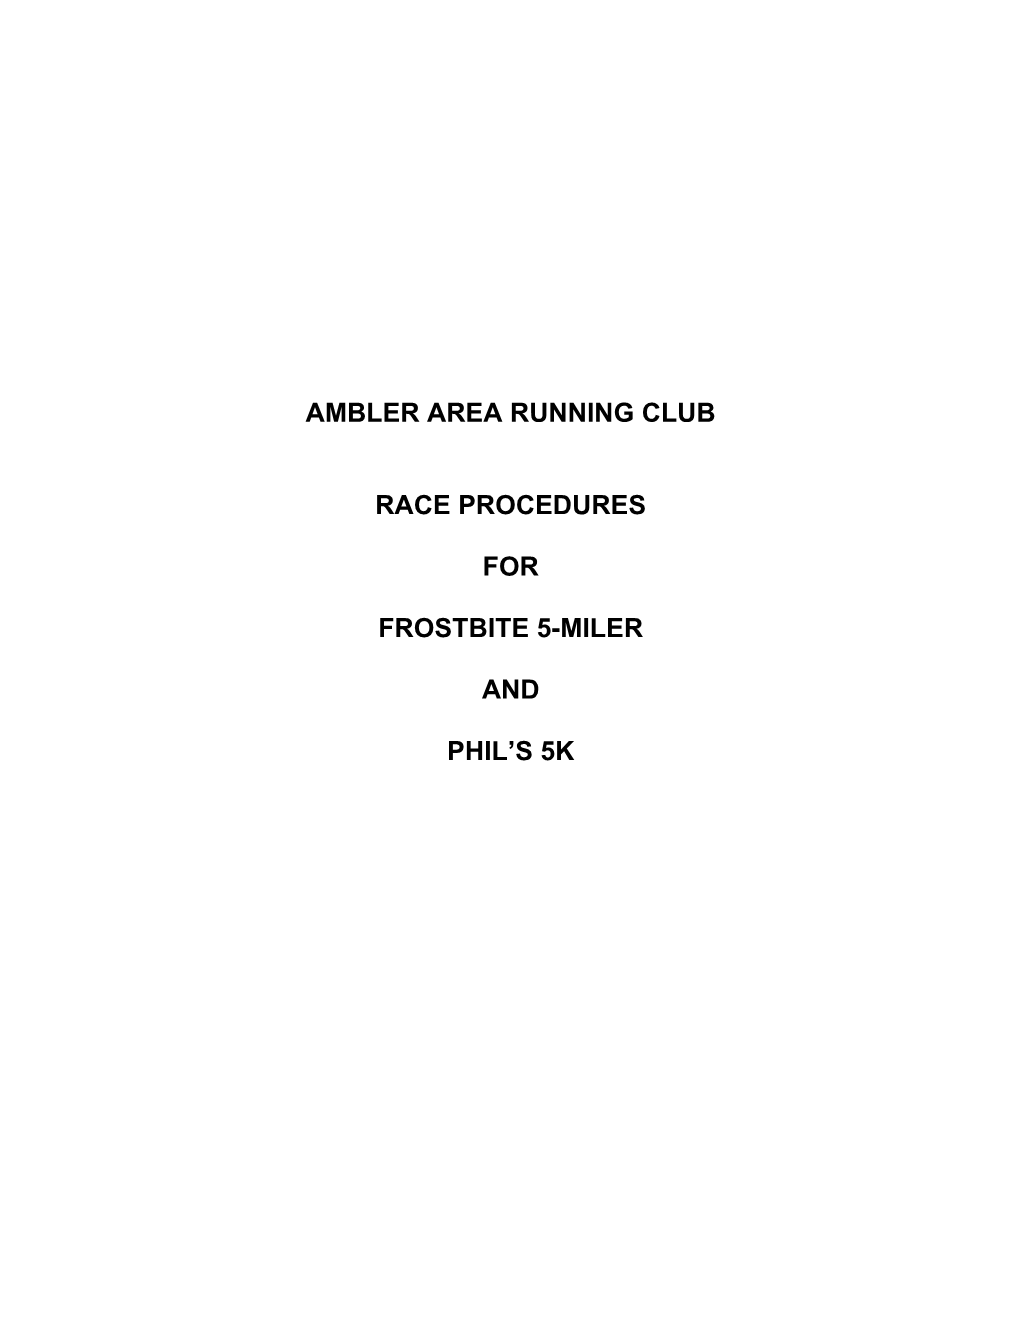 Ambler Area Running Club